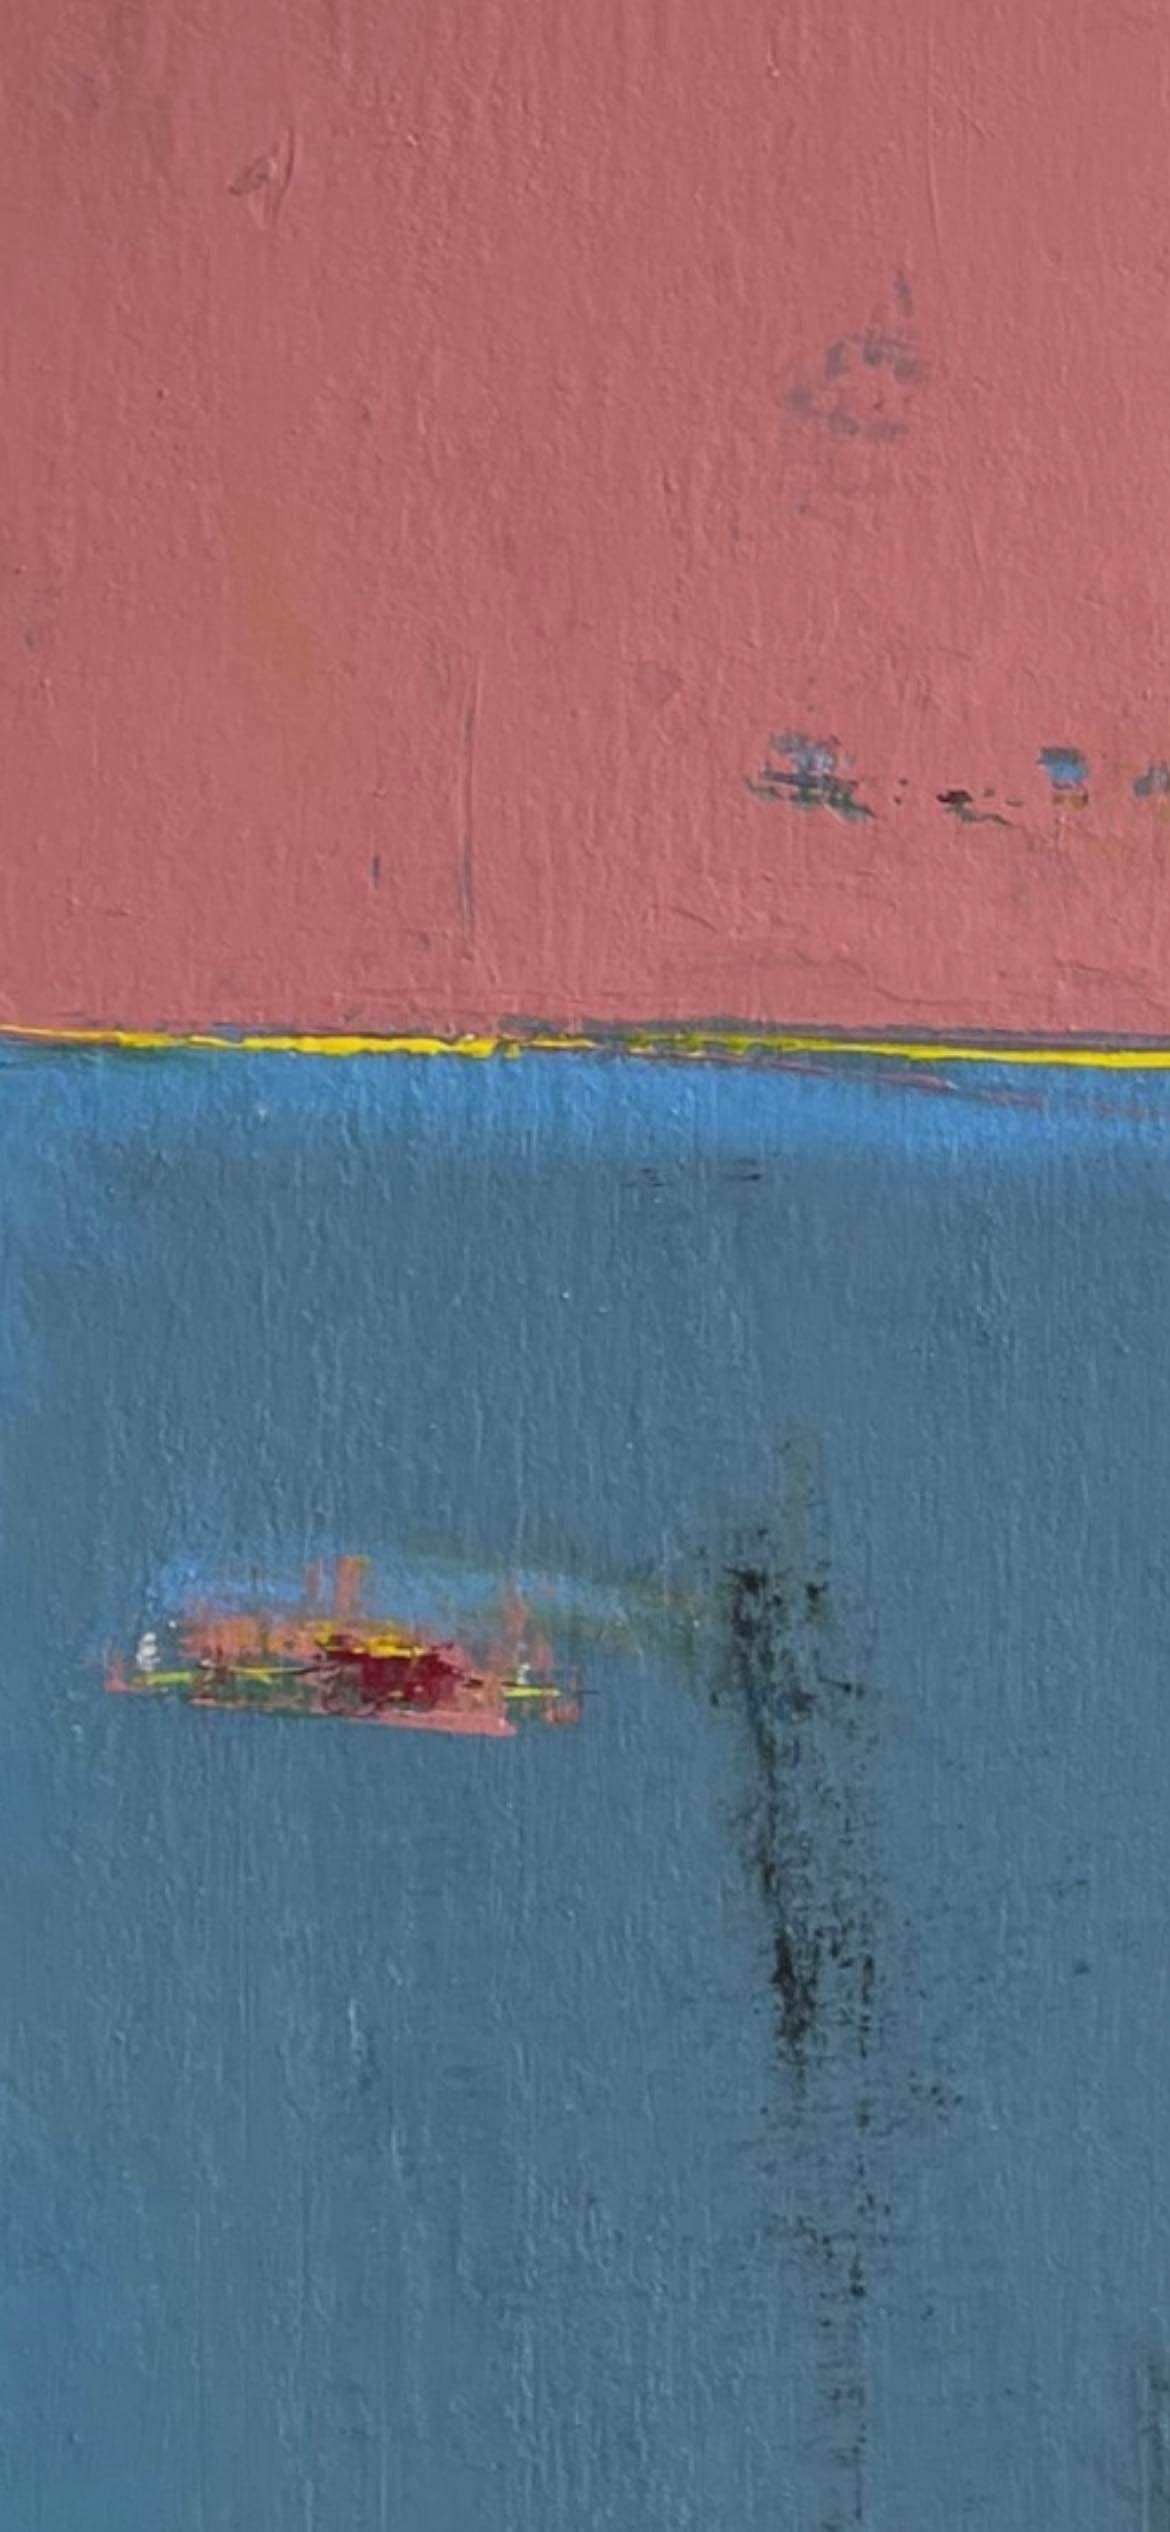 HINTSDECO Πίνακας Ζωγραφικής Πίνακας ζωγραφικής σε καμβά Acrylic with Oil Pastel με ξύλινη Κορνίζα, Sunship (70x70) Hintsdeco